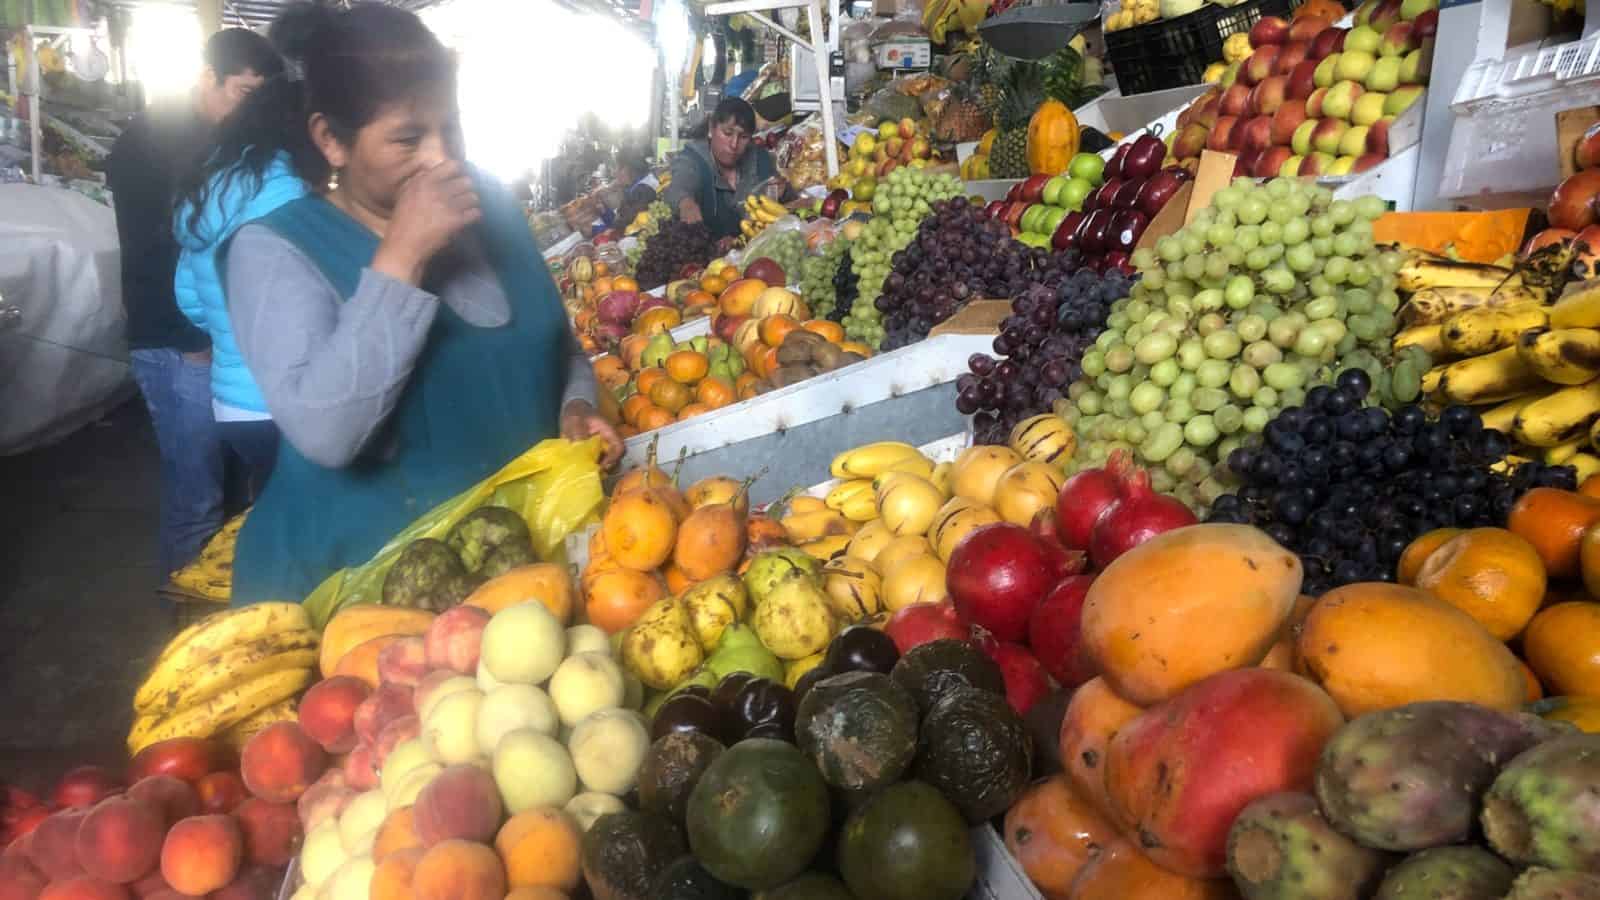 Roque Santeiro fair, Open-air market, sale of condiments and